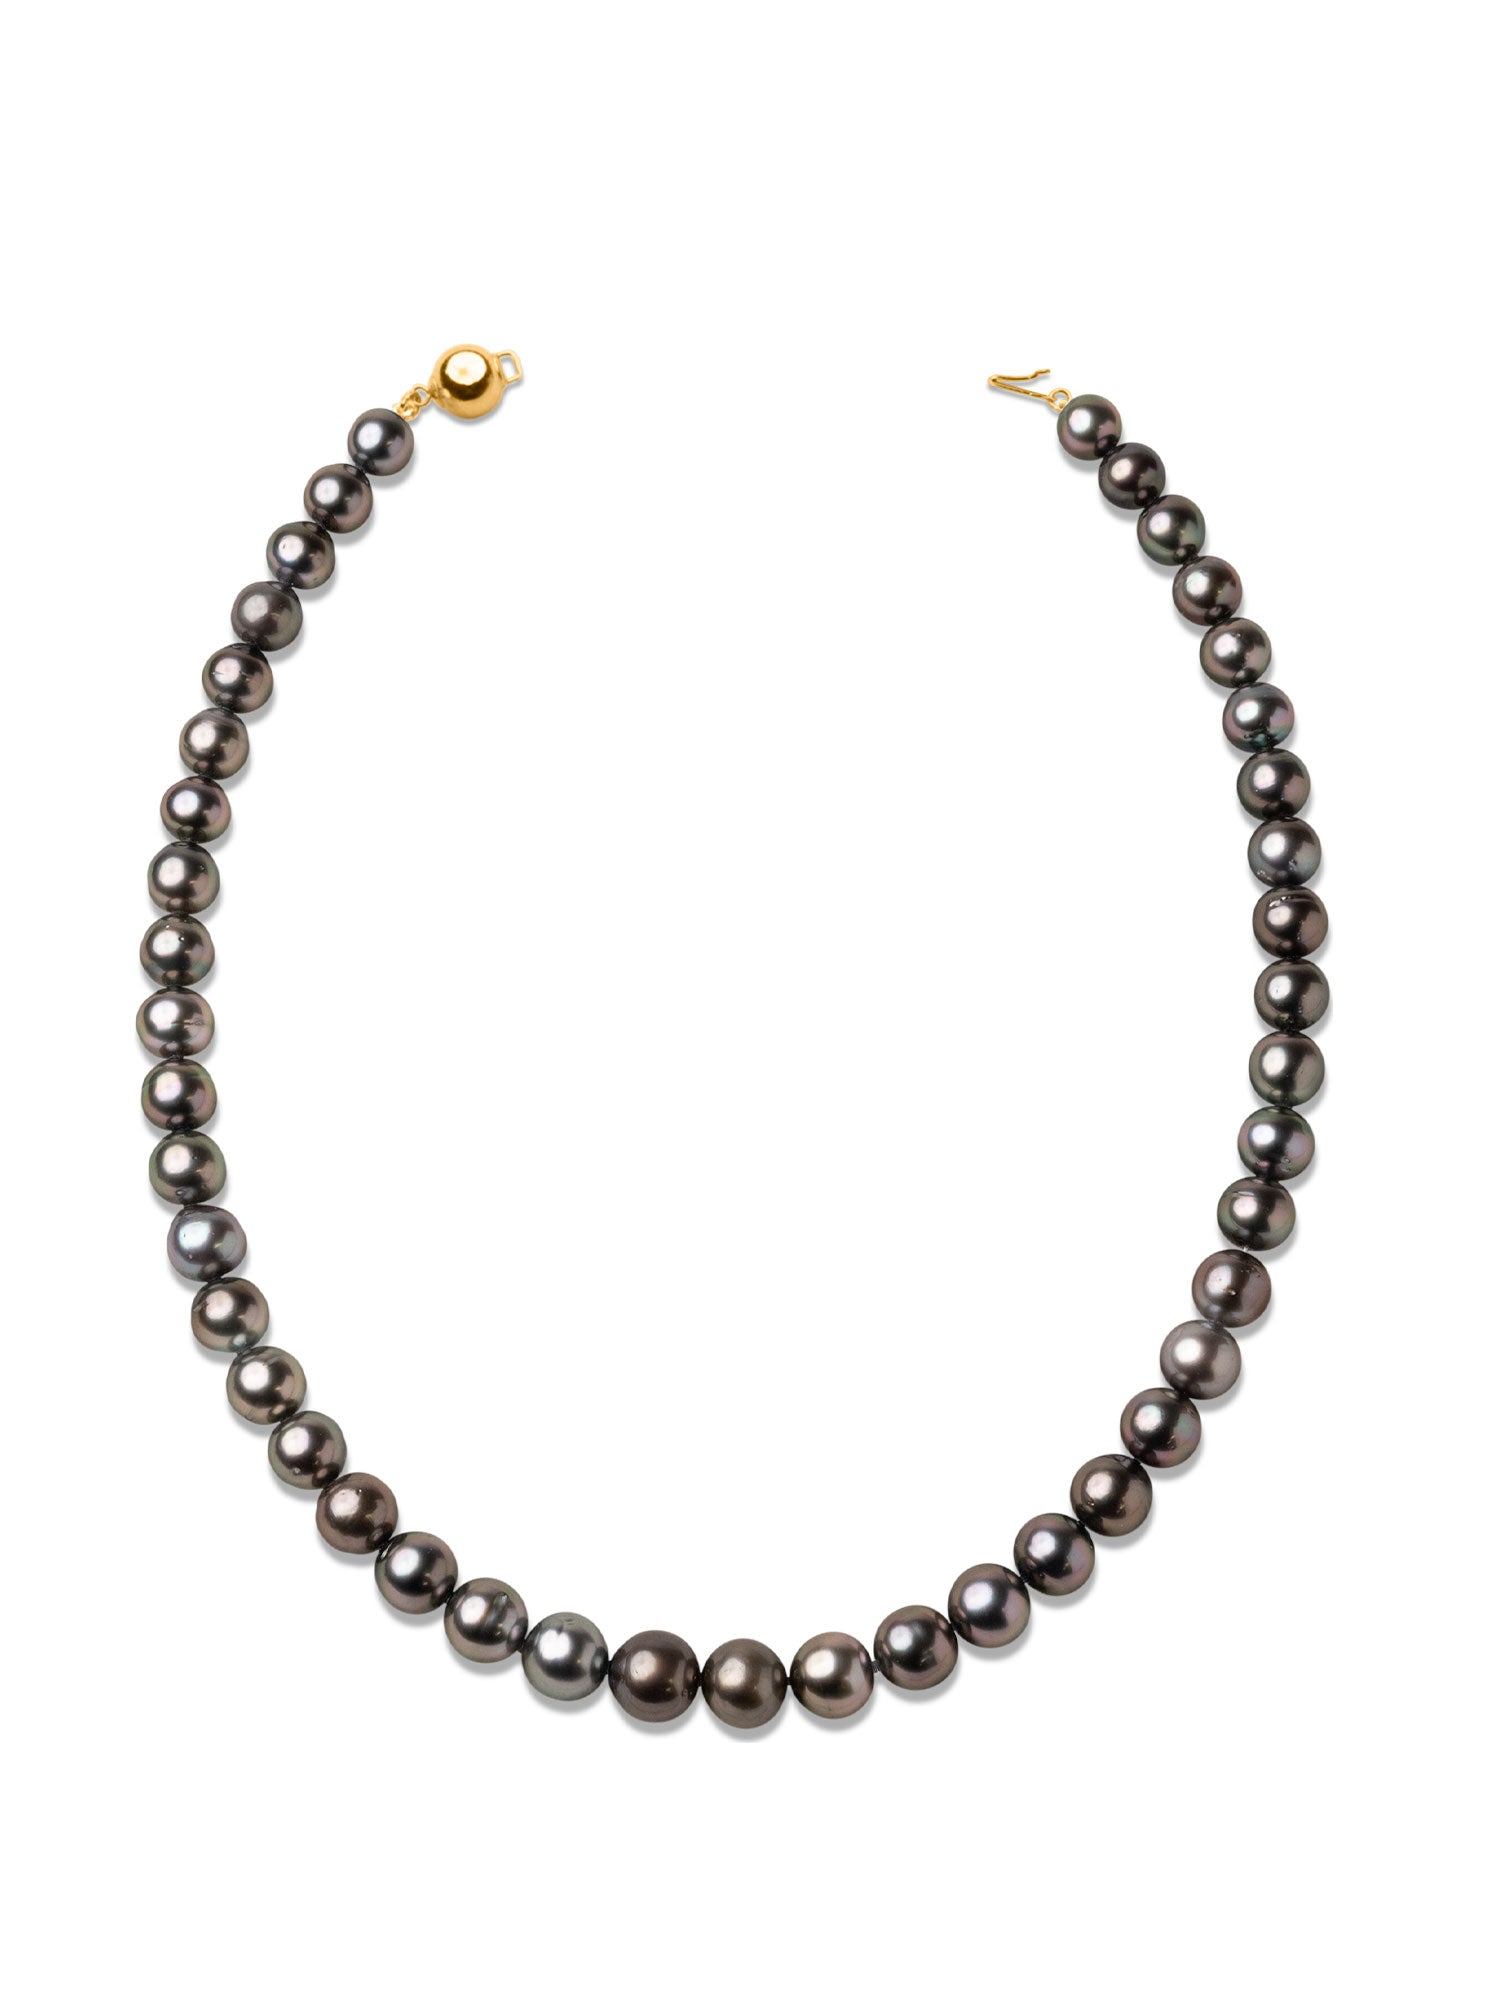 Collar de perlas cultivadas naturales Tahití redondas de 8 a 11 mm de color chocolate